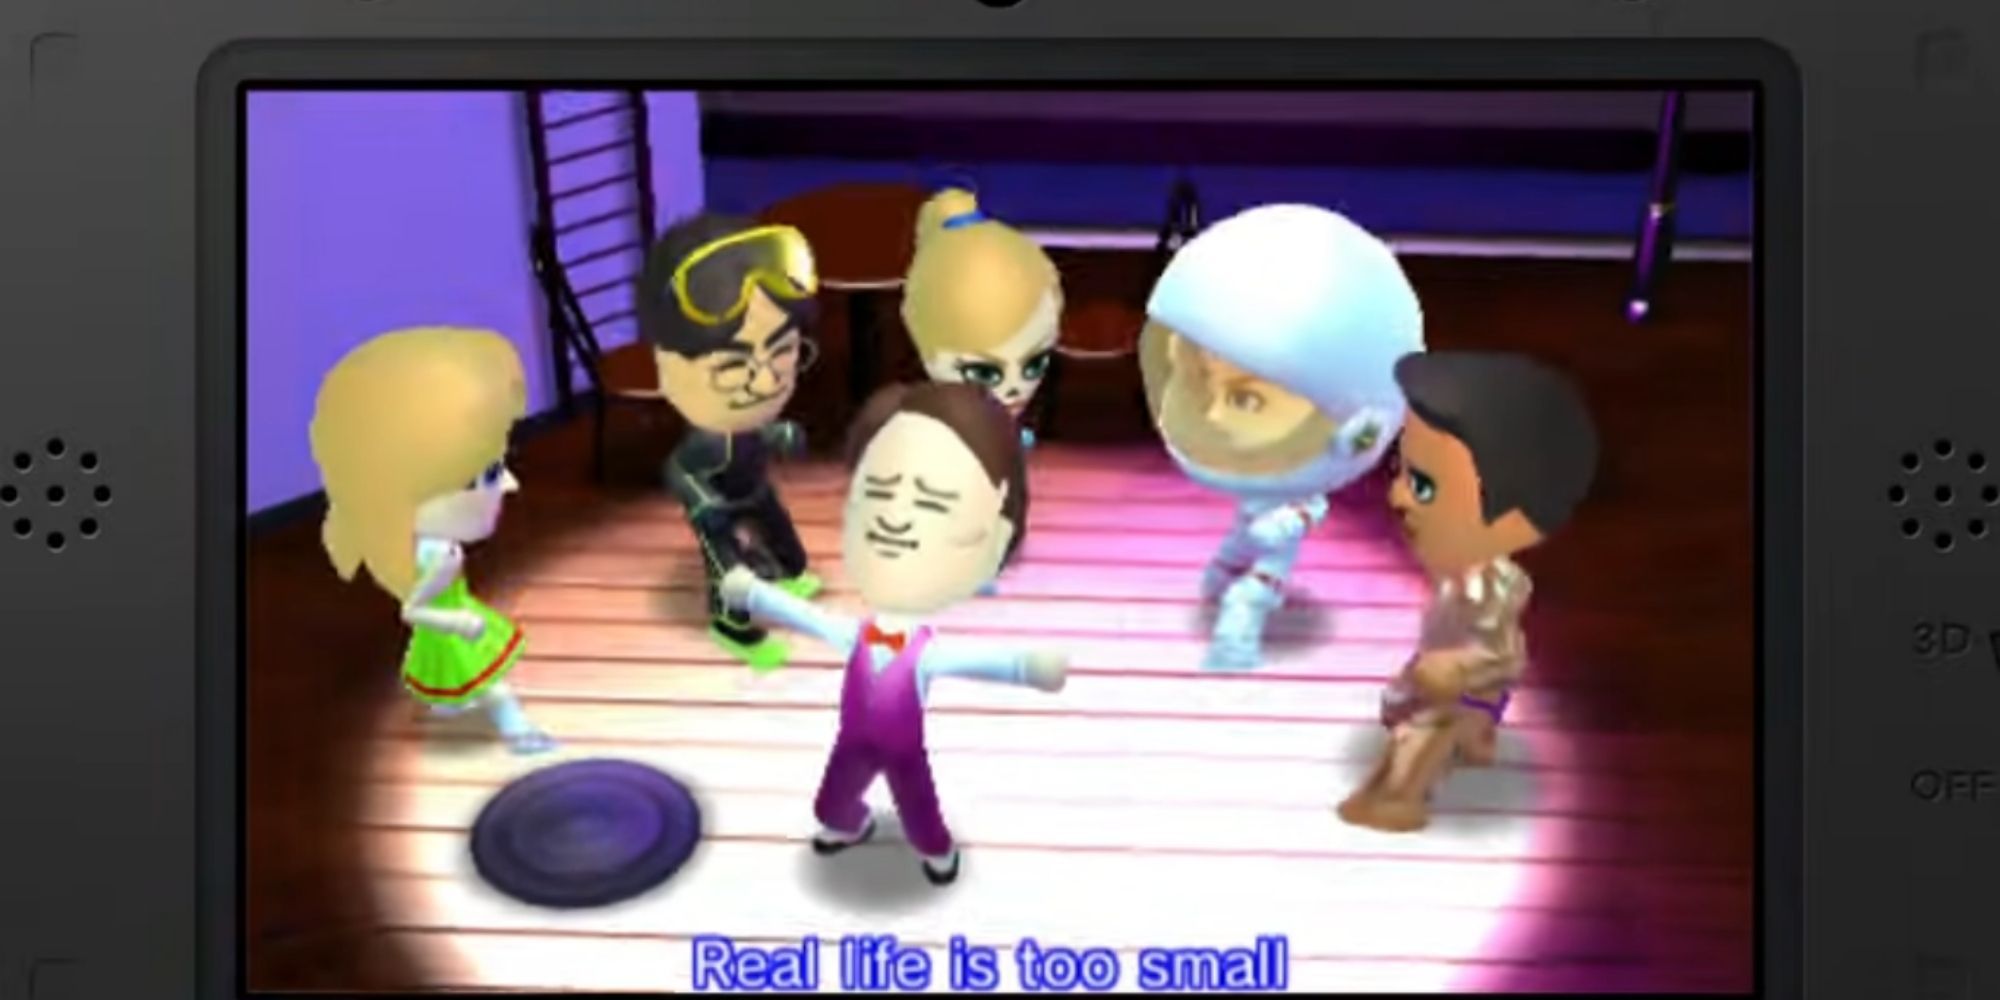 Bill Trinen's Mii sings a song while Iwata, Reggie, and Zero Suit Samus dance around him